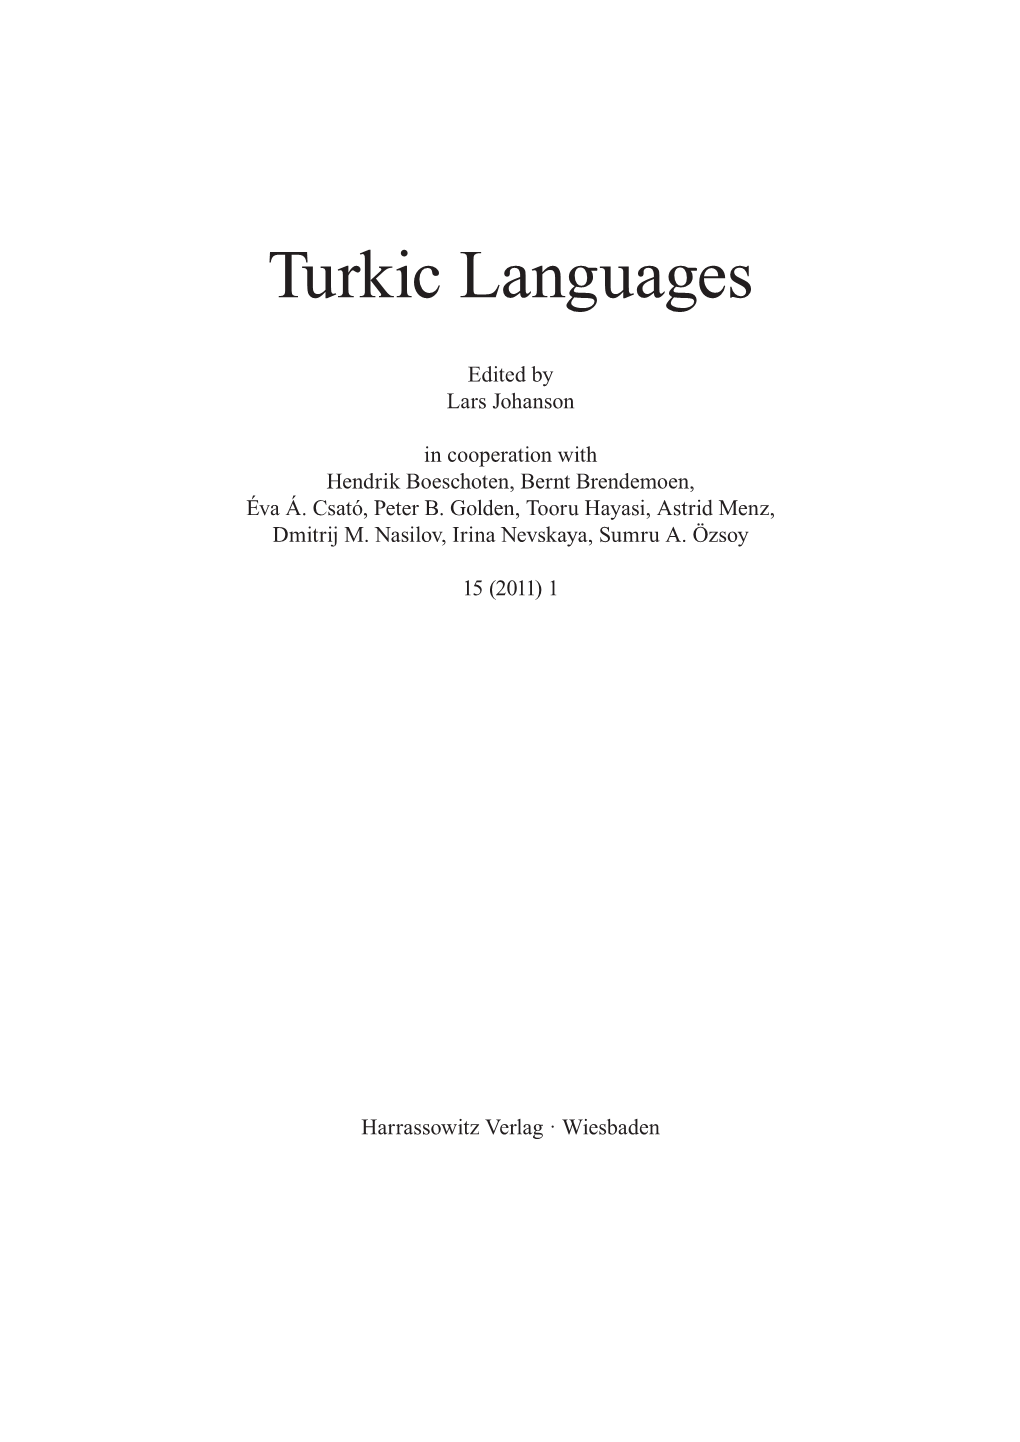 Turkic Languages 15 (2011)